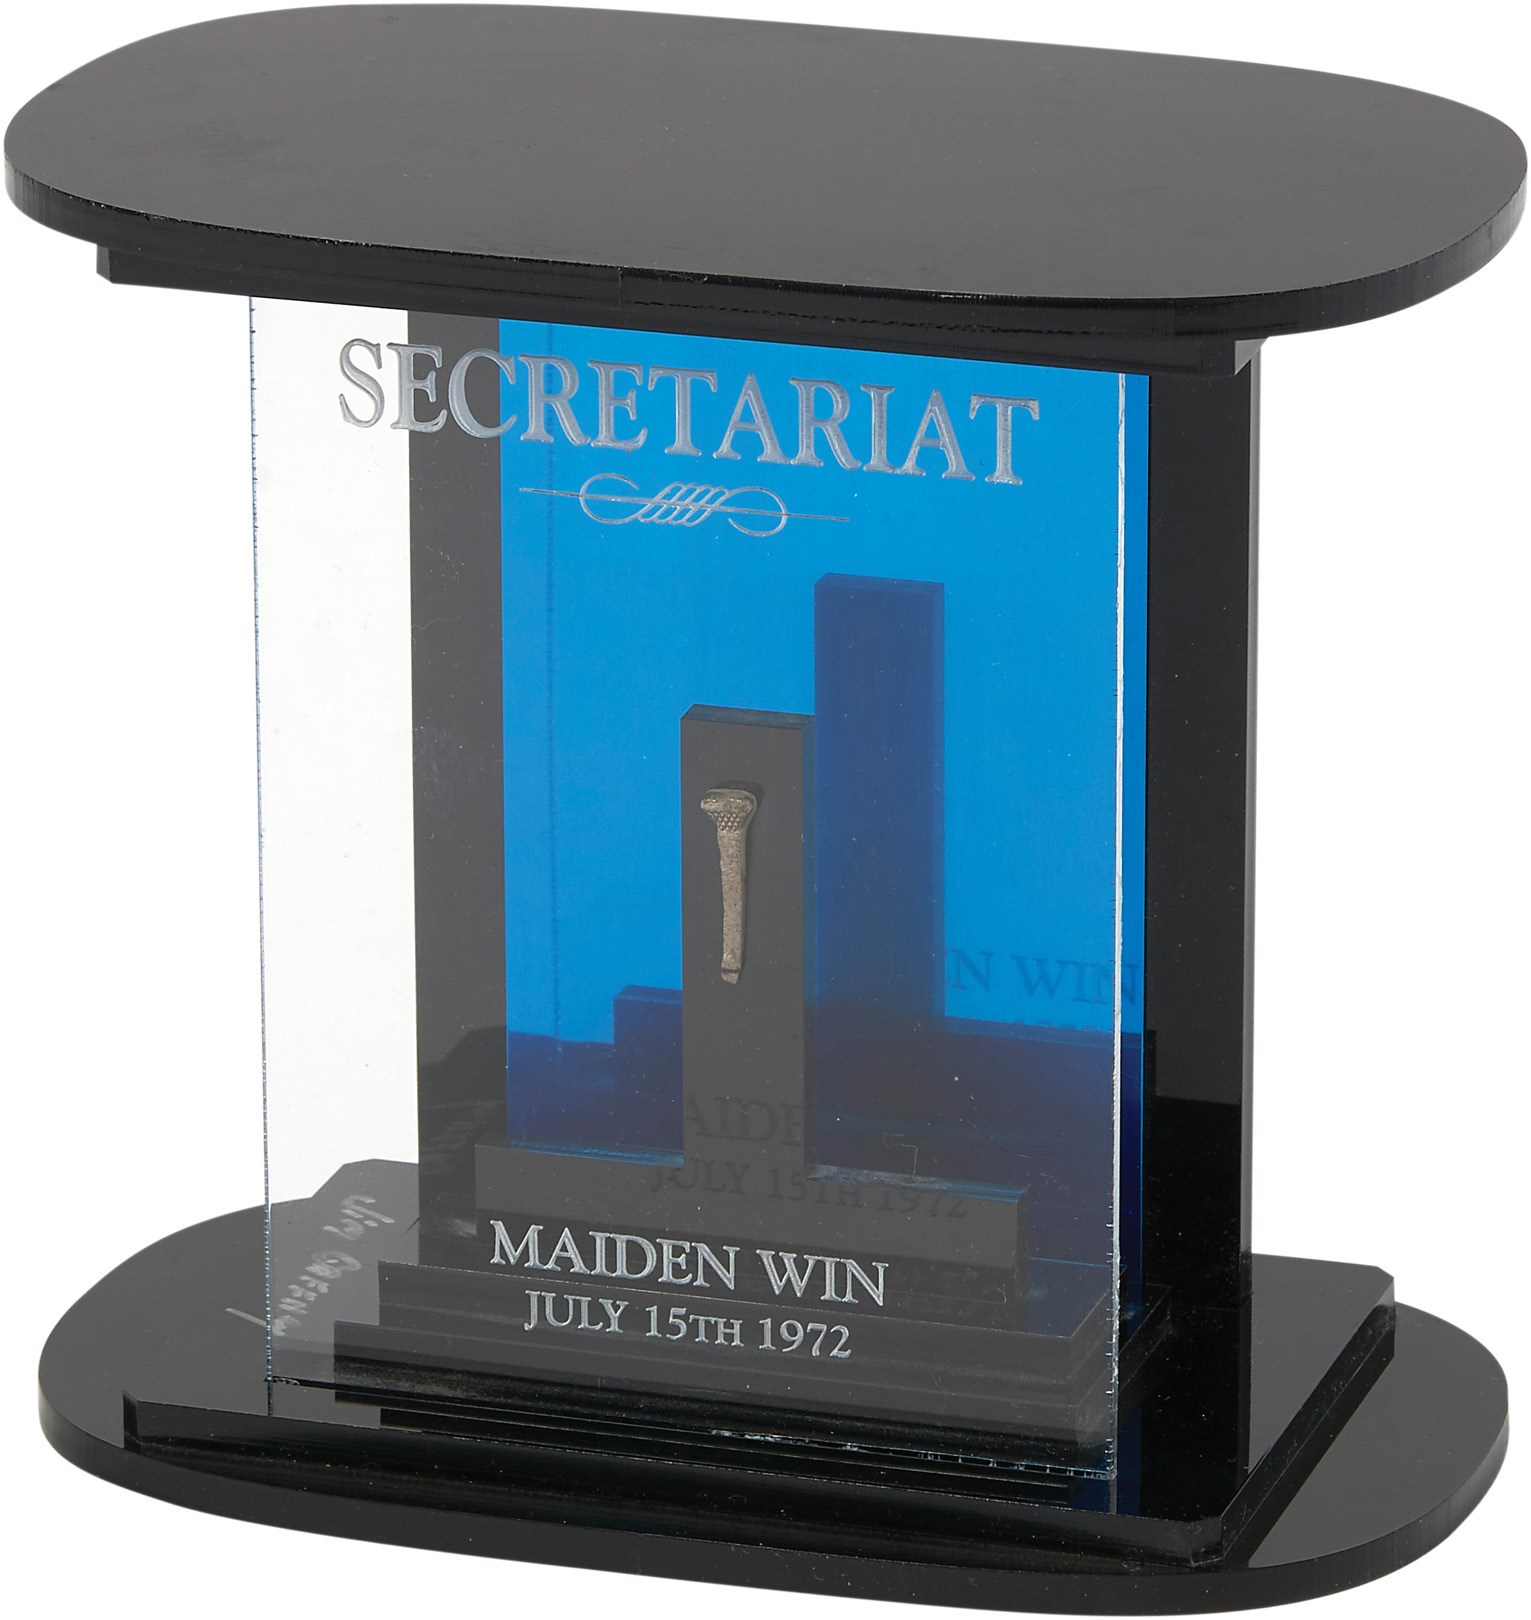 - 1972 Secretariat Maiden Win Nail